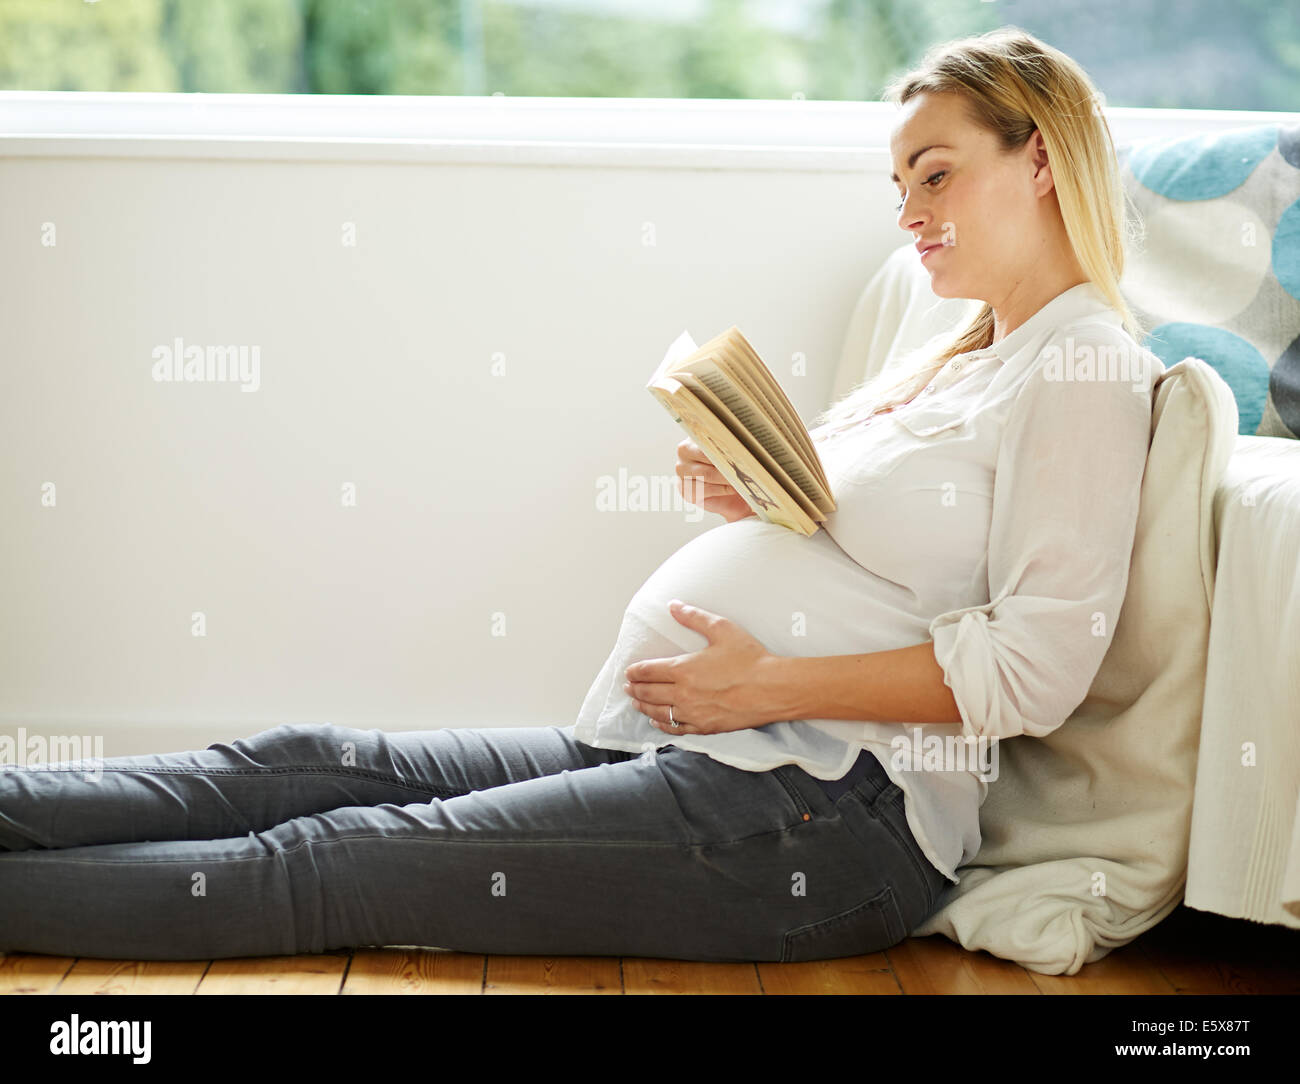 Pregnant woman reading book Stock Photo